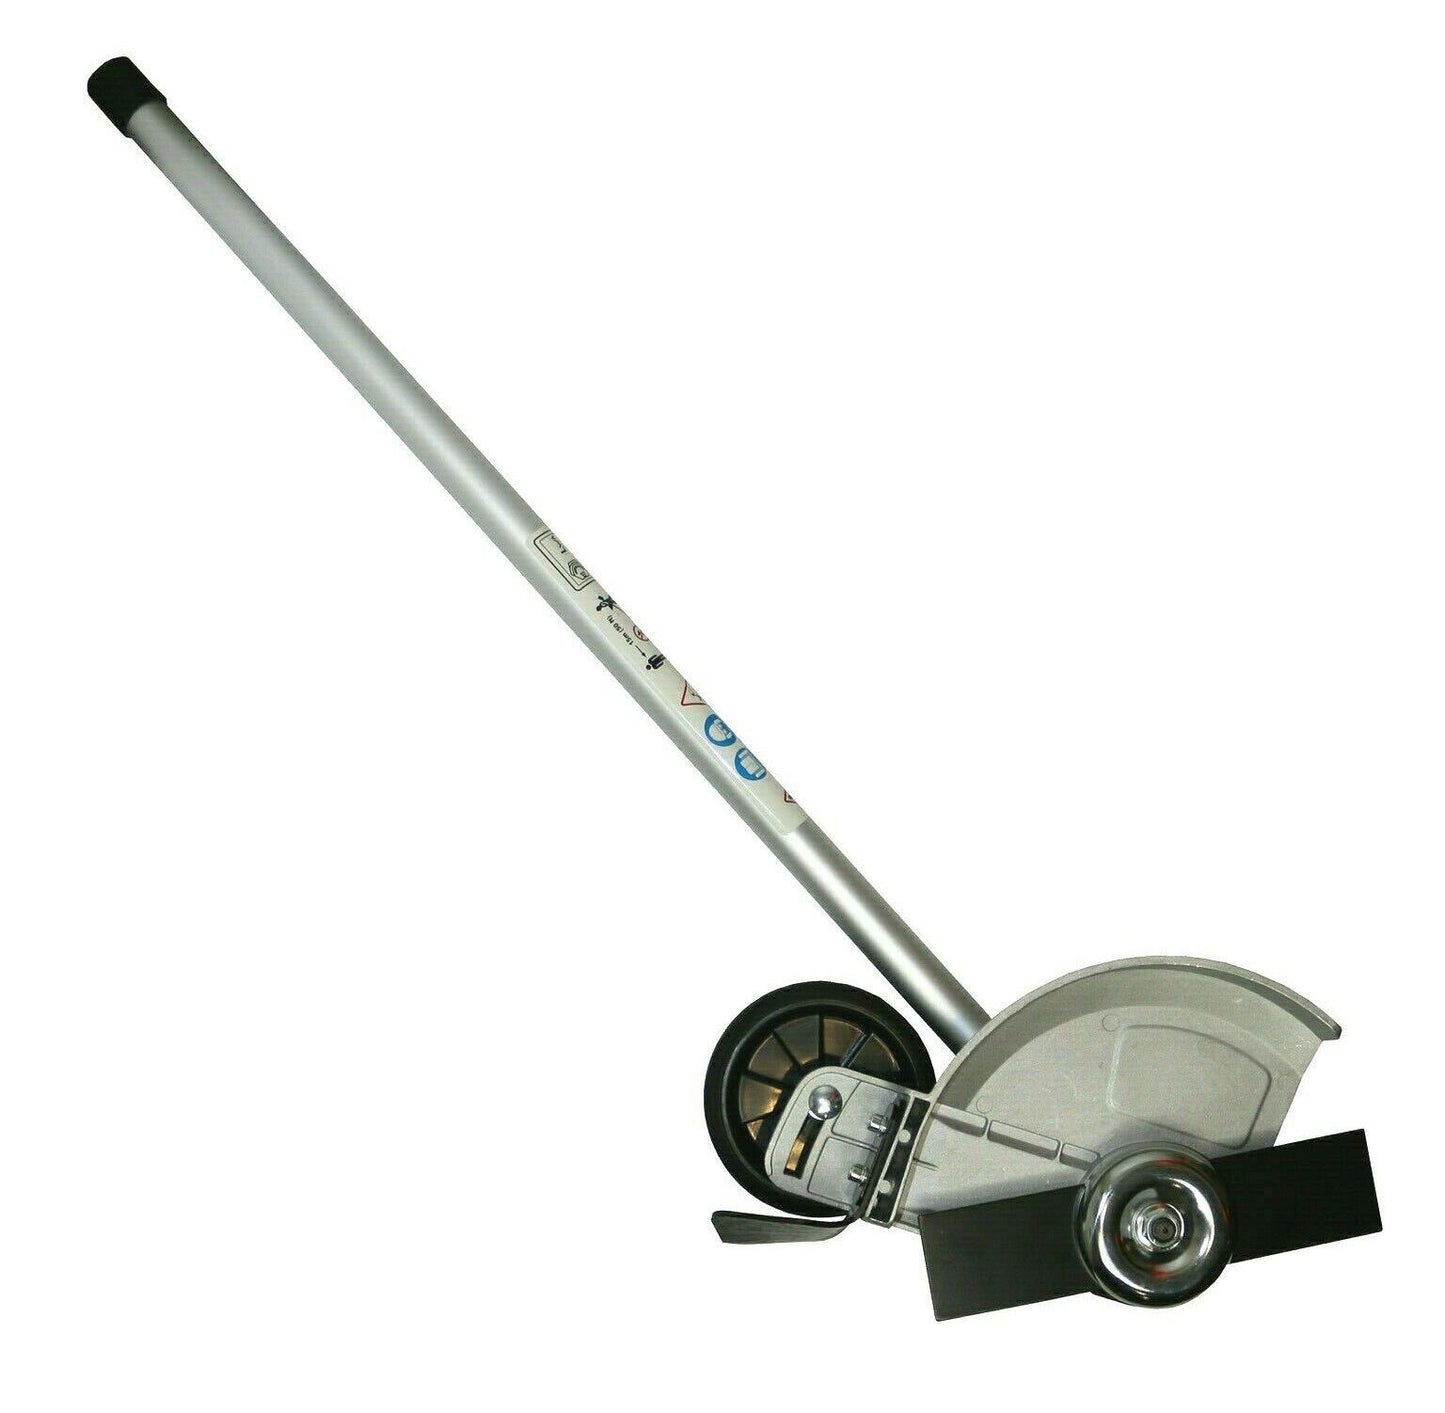 Grass Edger Attachment Pole Chainsaw Whipper Brushcutter For Black Eagle/OZ STAR